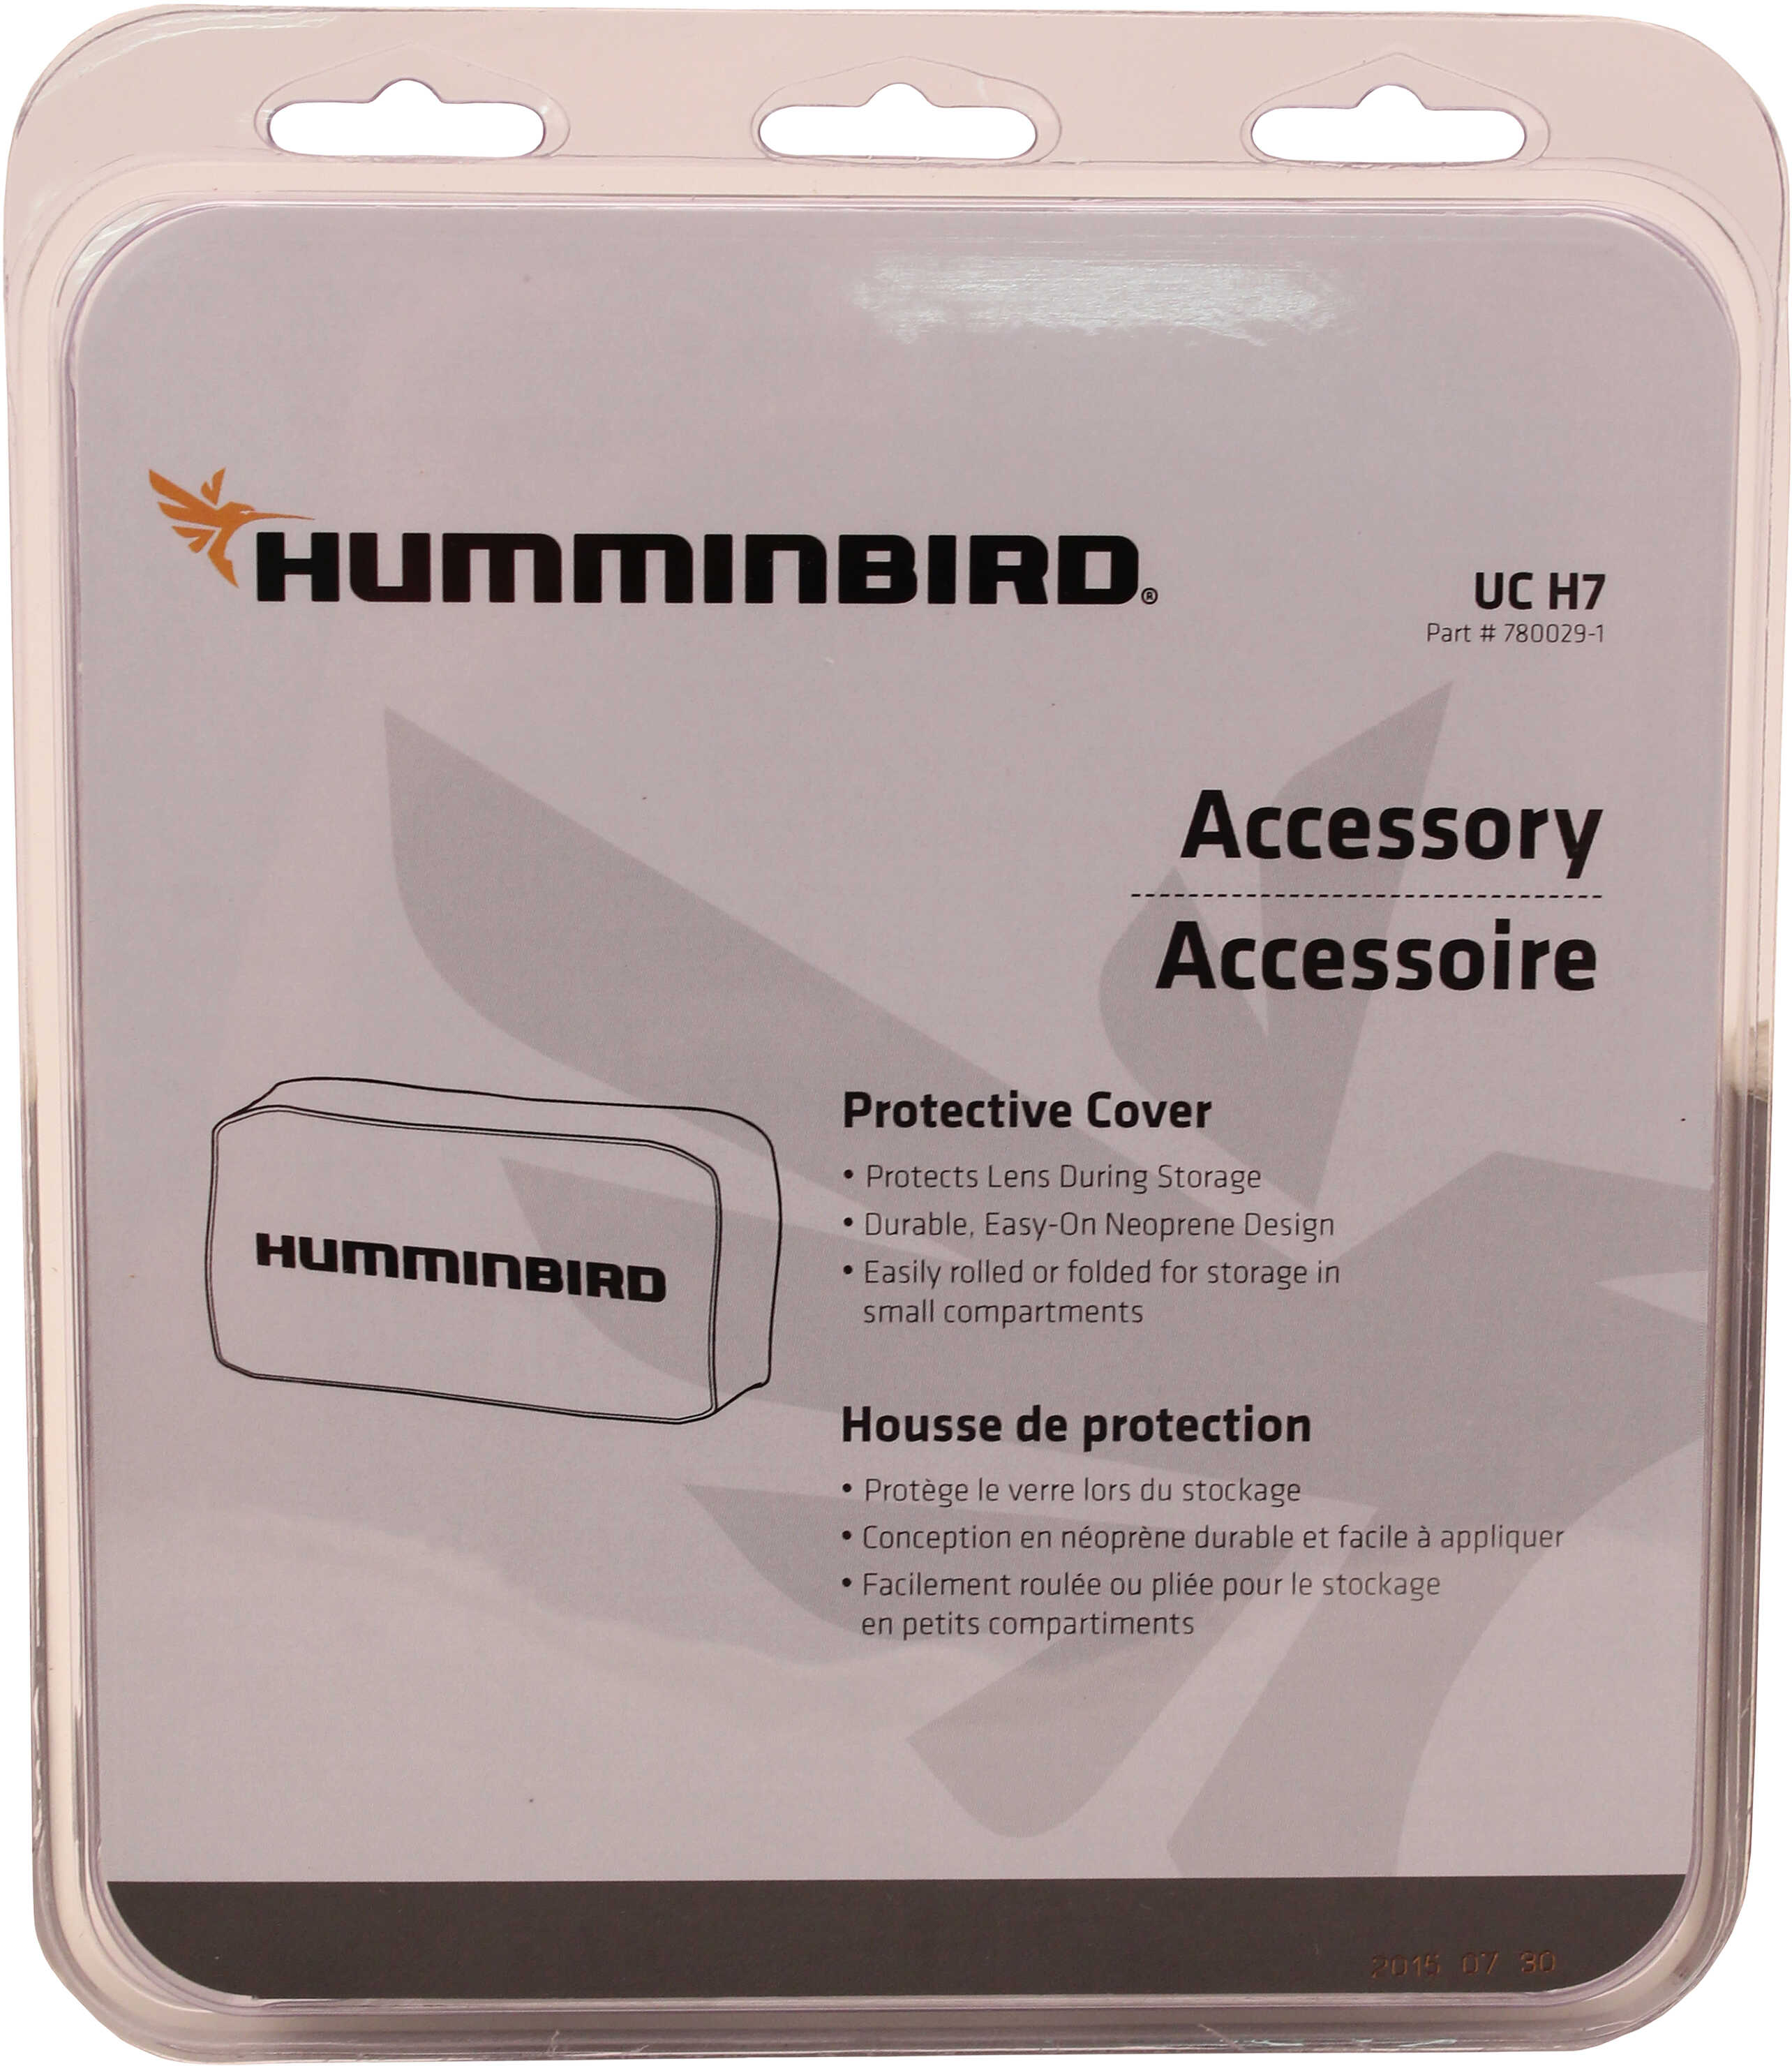 Humminbird Helix 7 Series Unit Cover Md: 780029-1